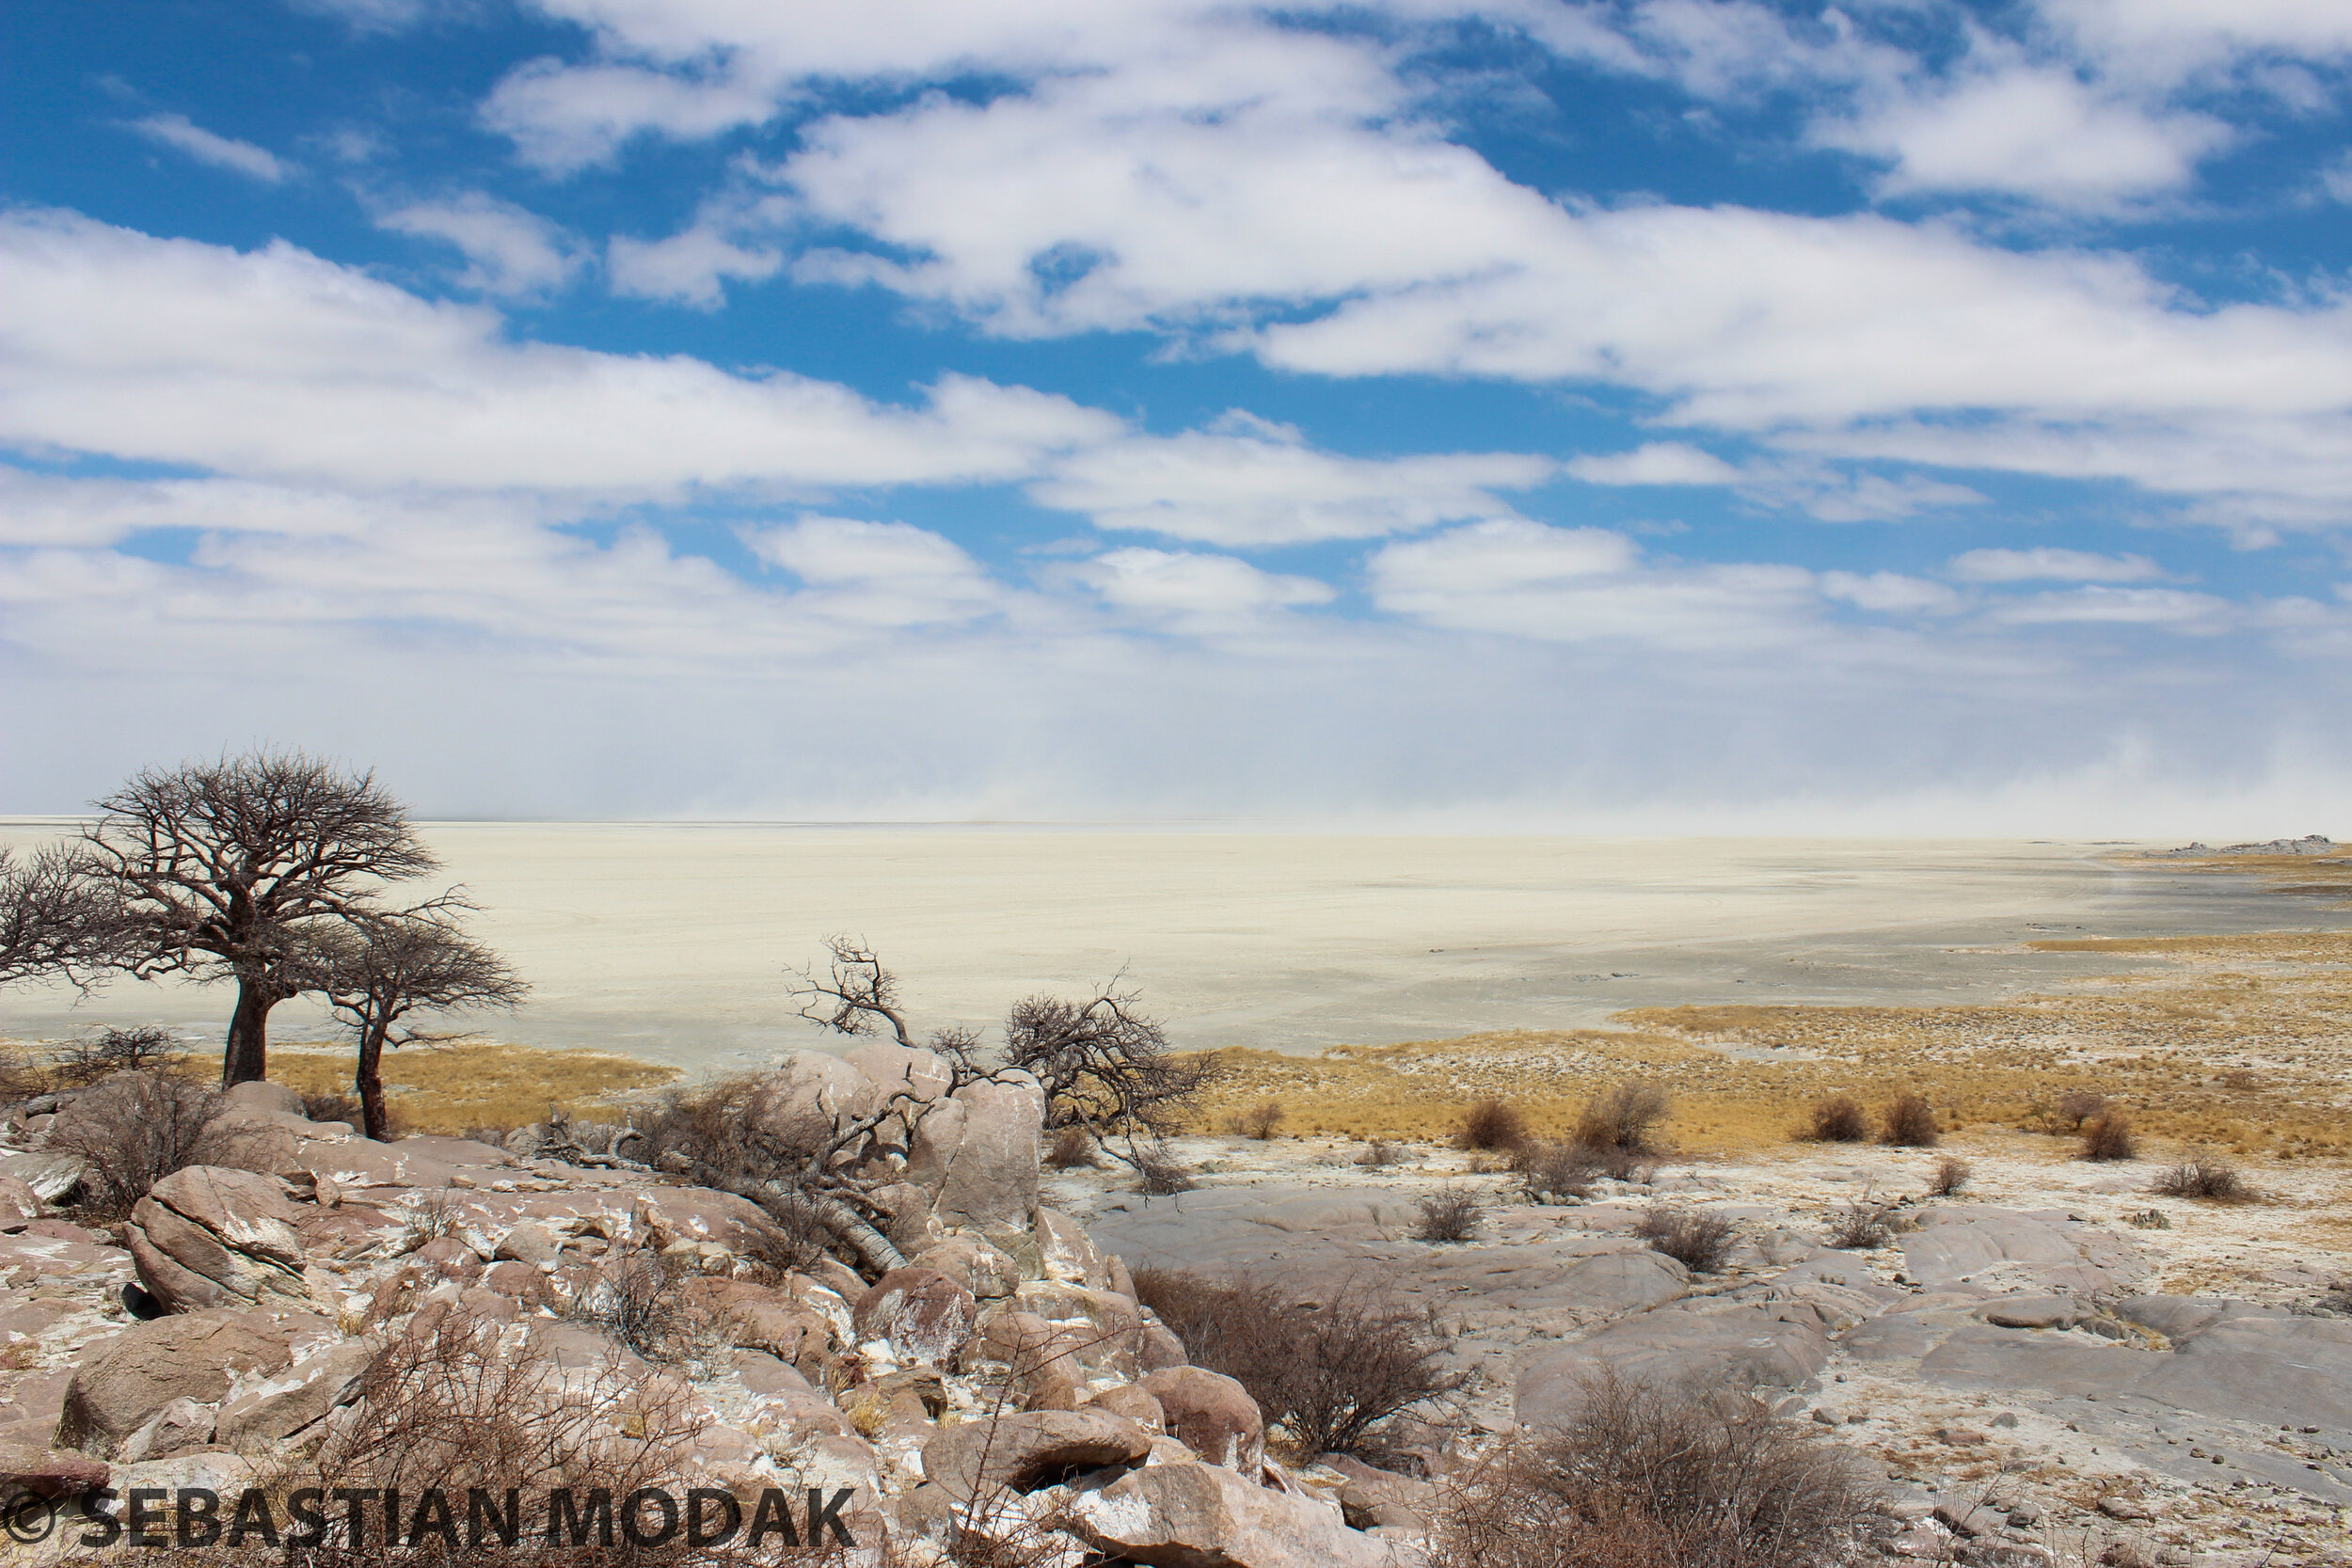  Makgadikgadi Pan, Botswana 